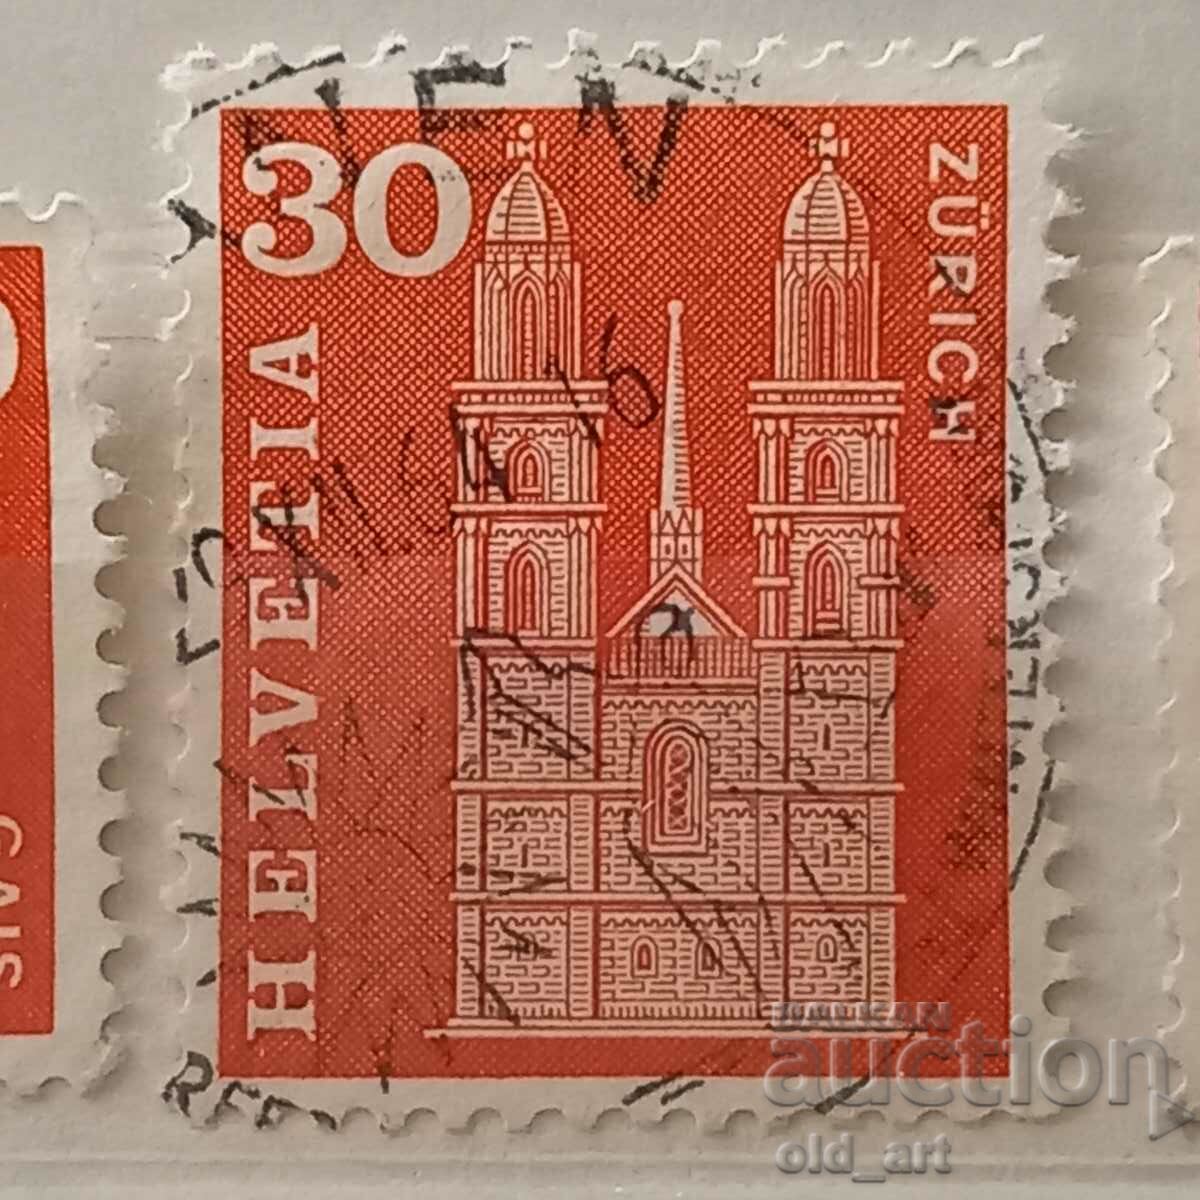 Postage stamp - Switzerland, Postal History, 1963